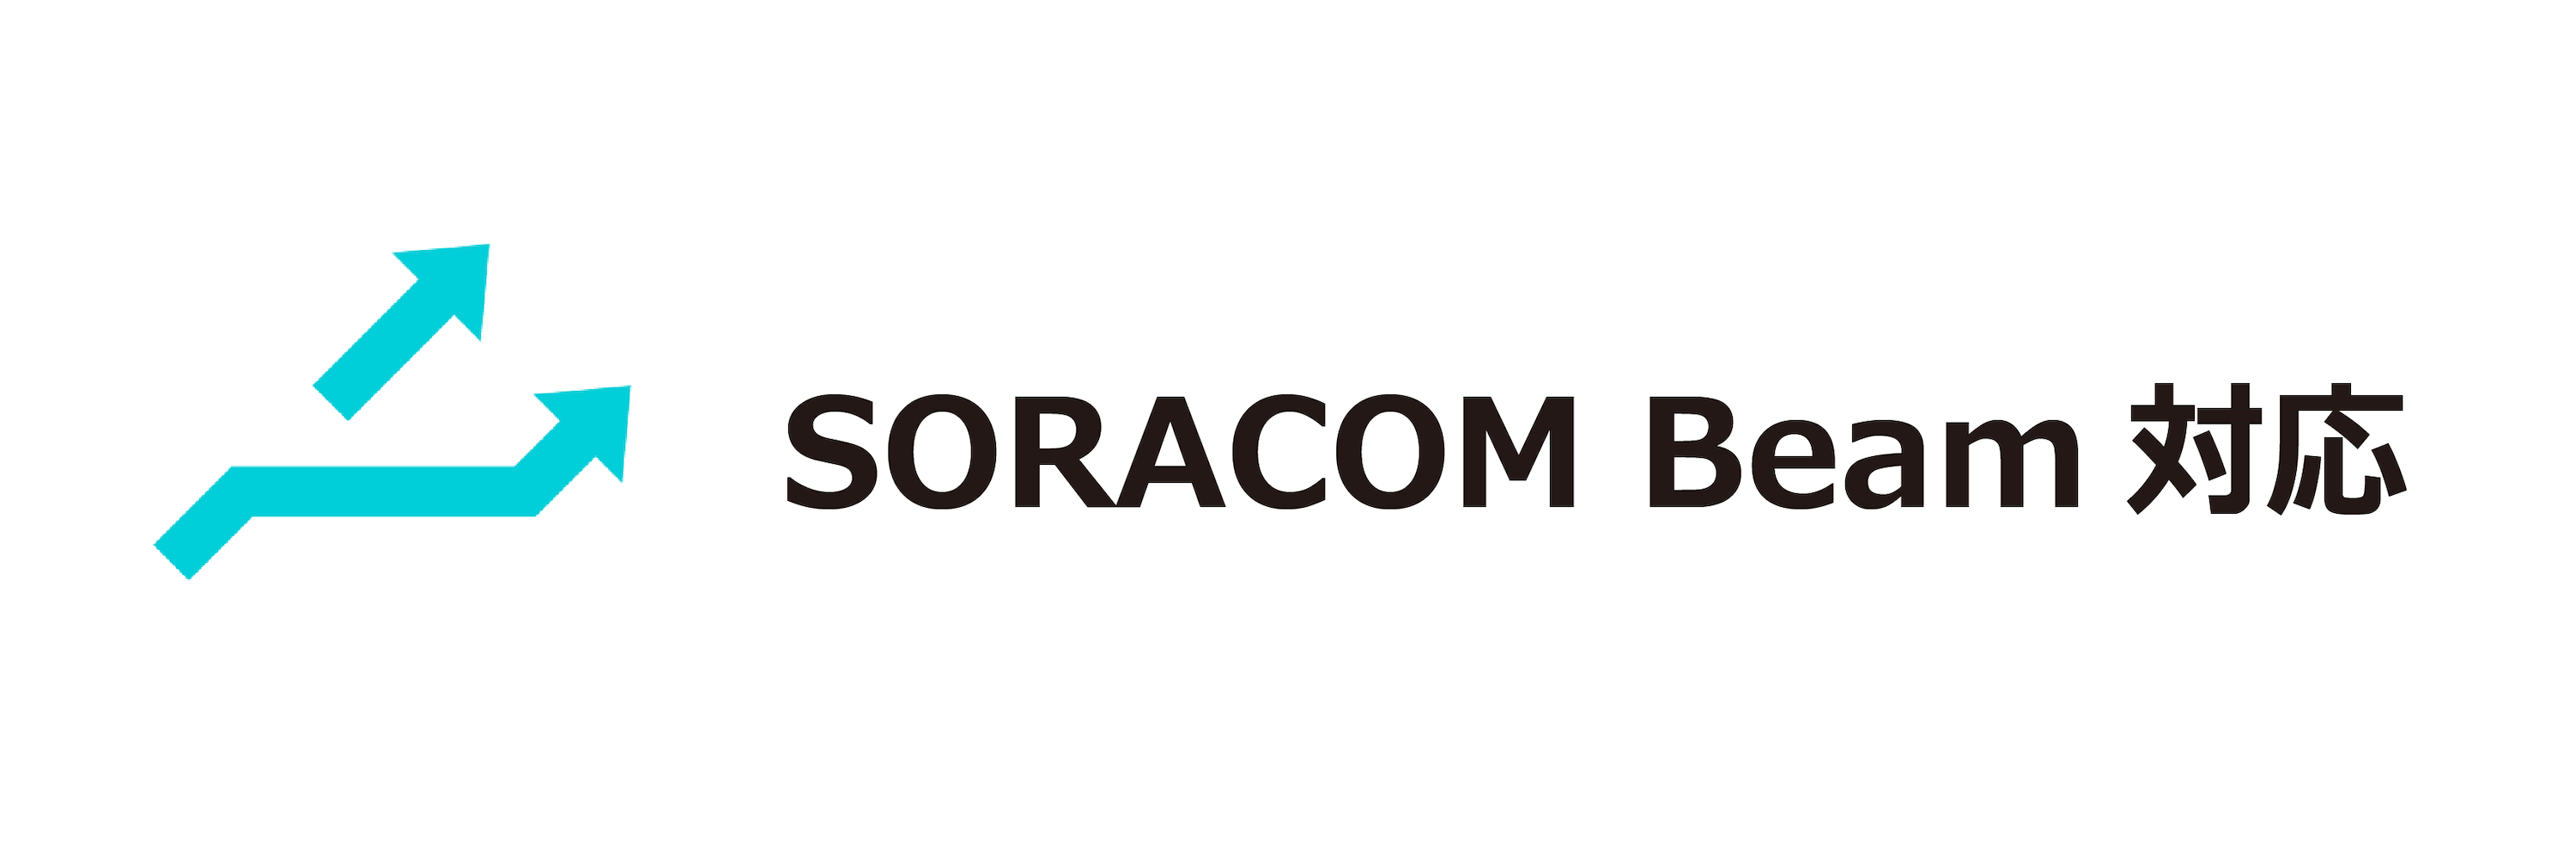 SORACOM Beam対応